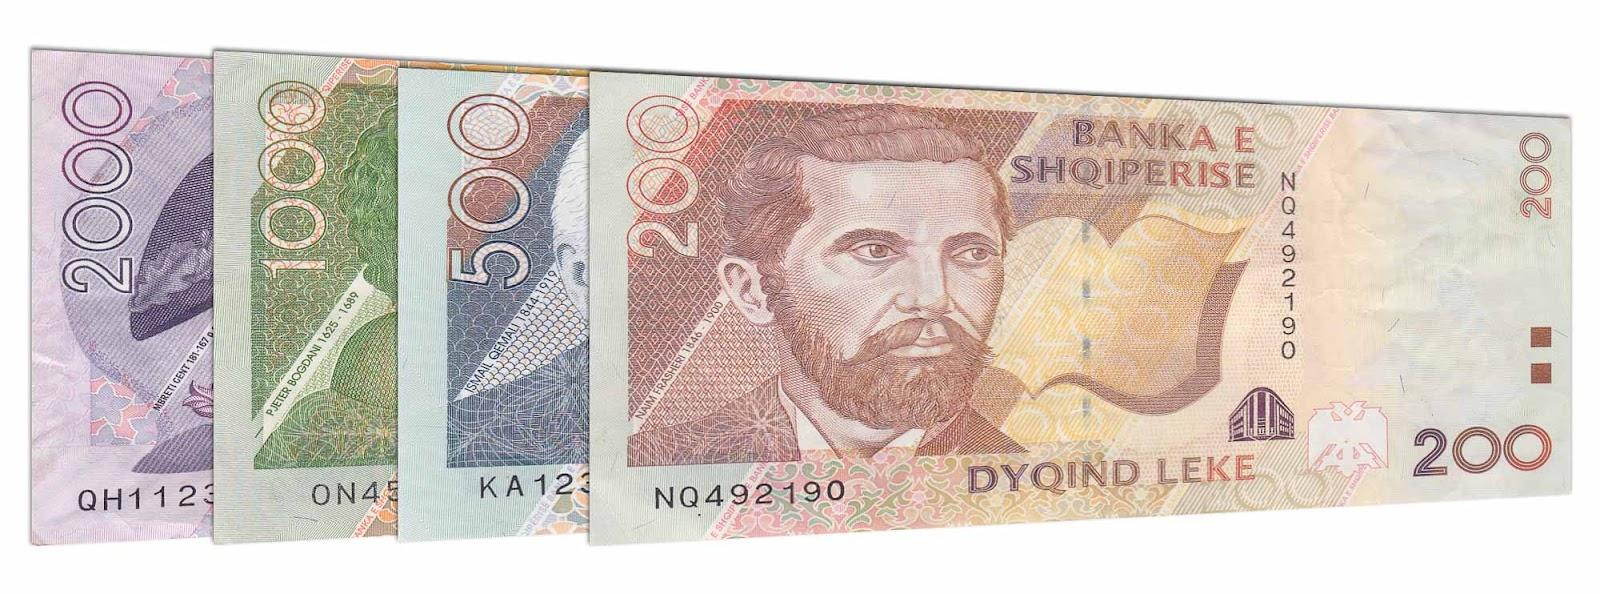 Albanian leke banknote series